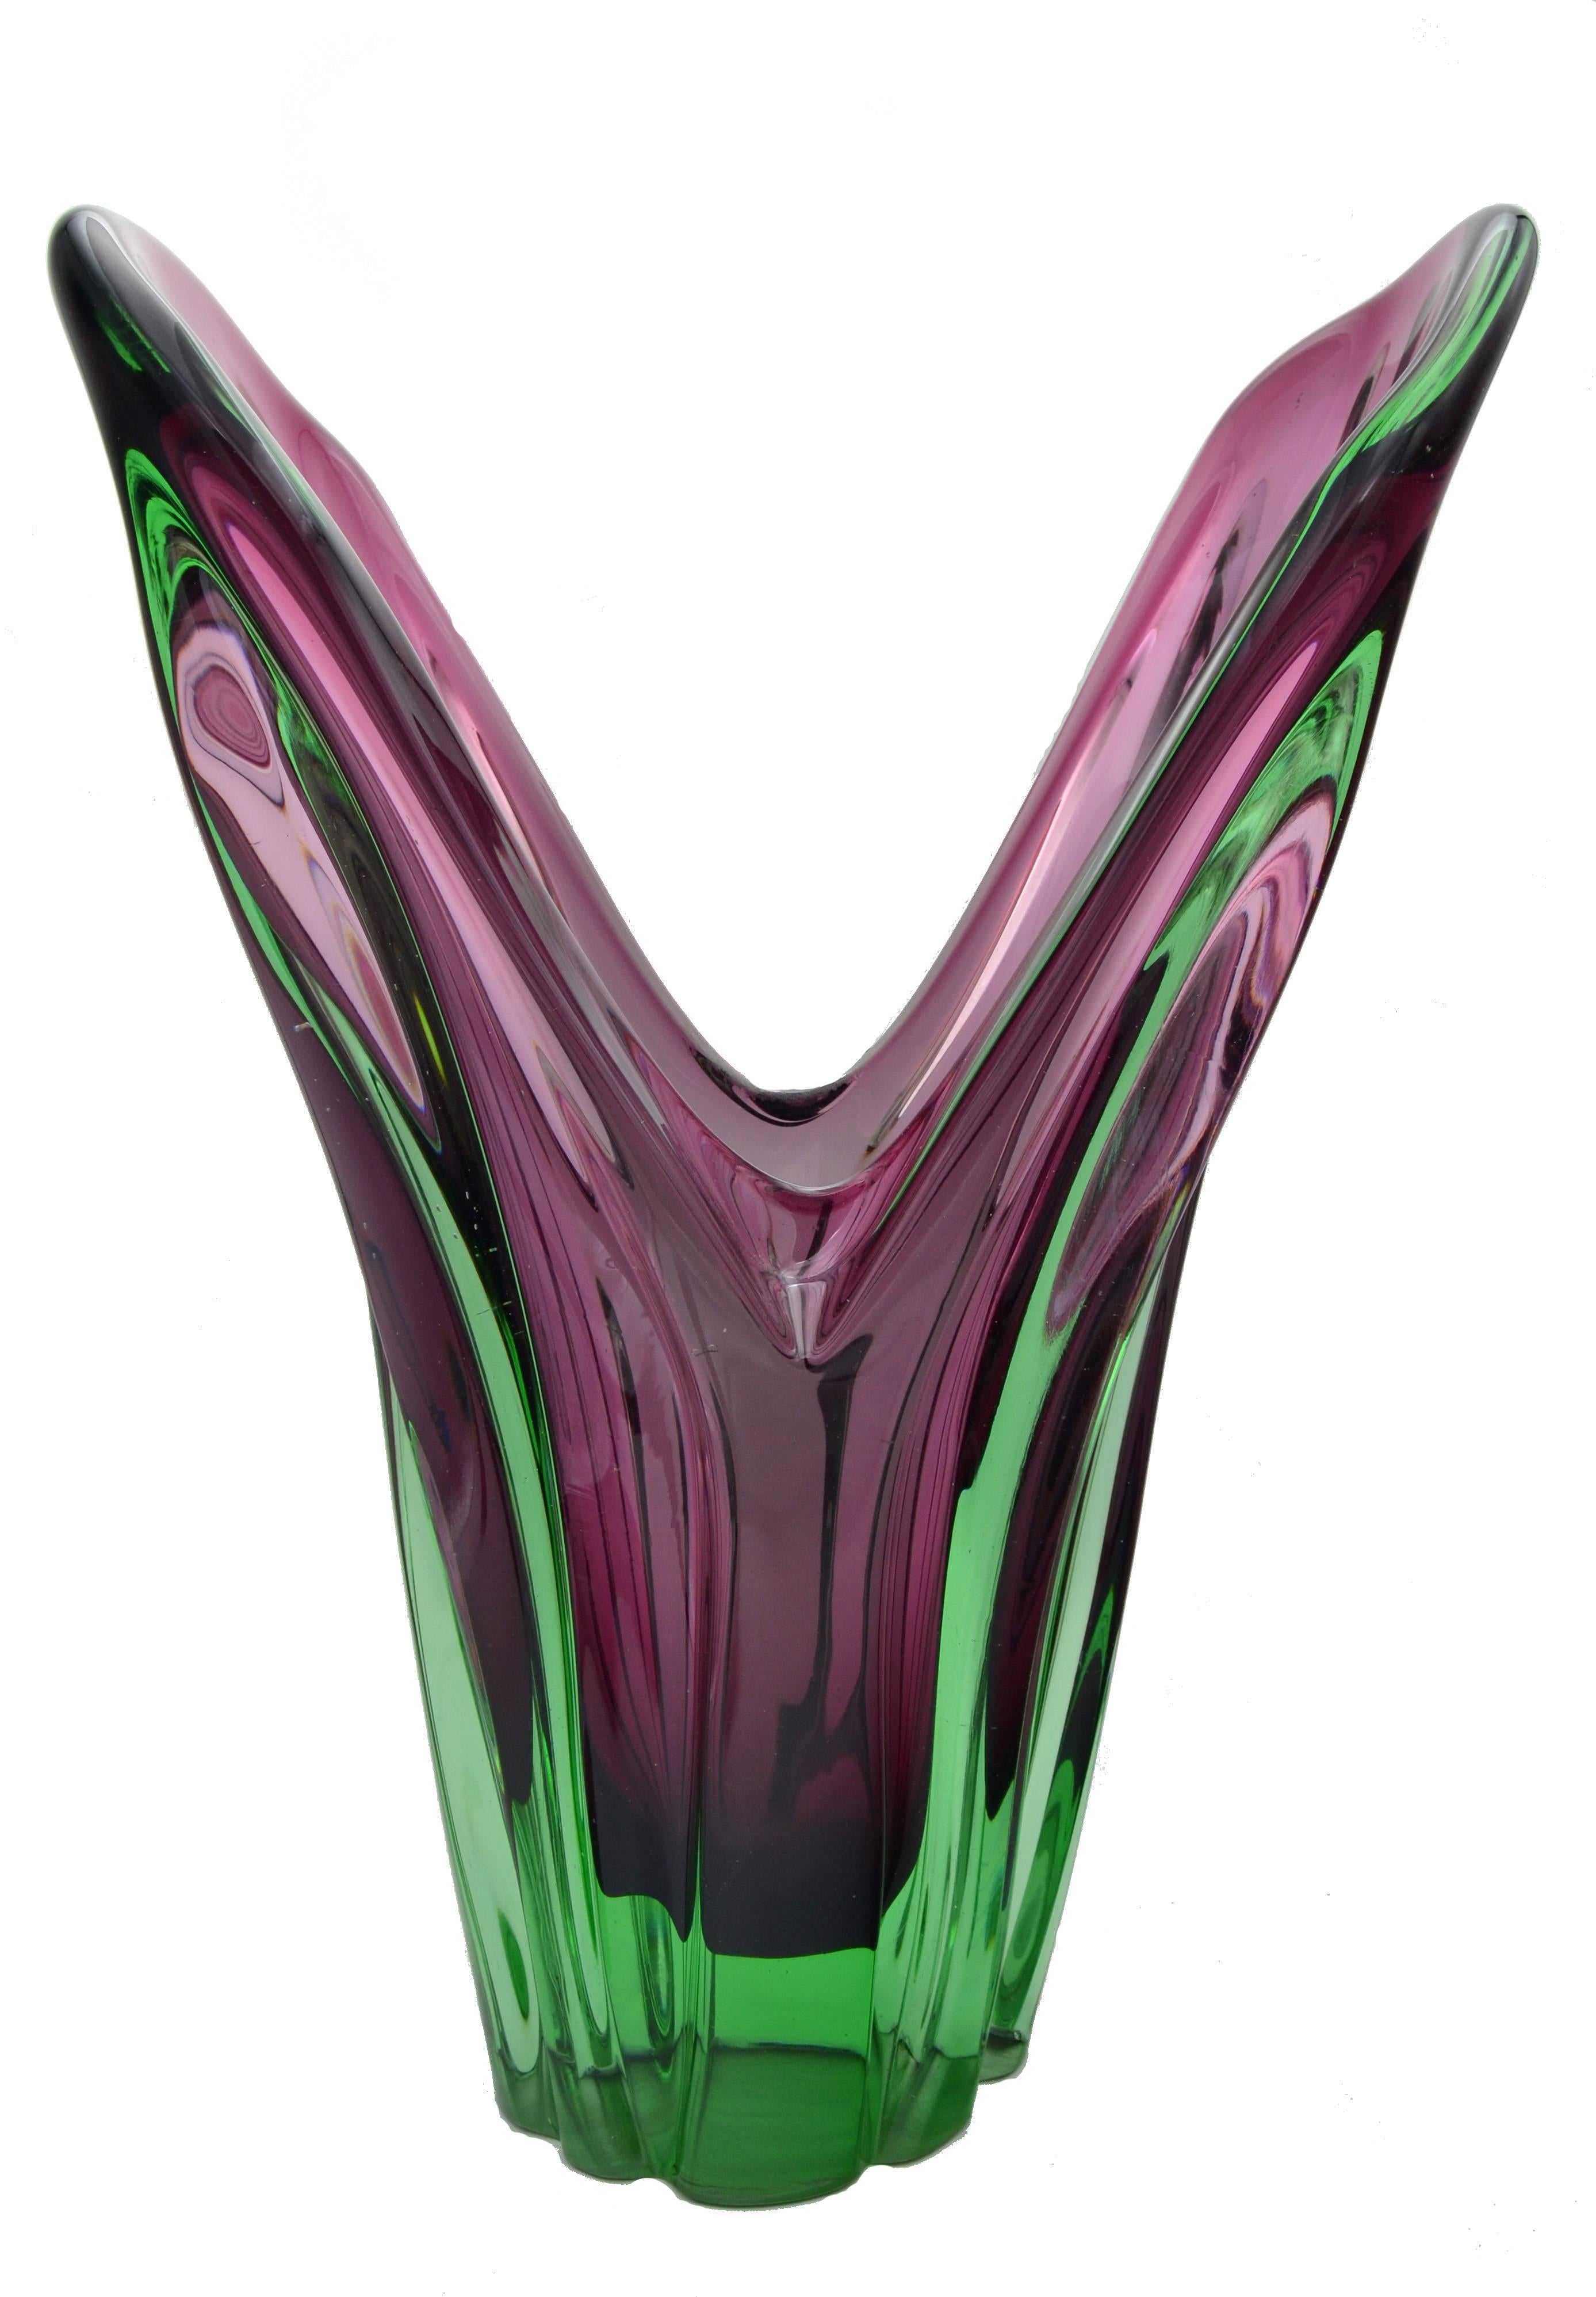 Huge Murano glass vase attributed to Salviati. Handblown in very heavy purple and green glass.